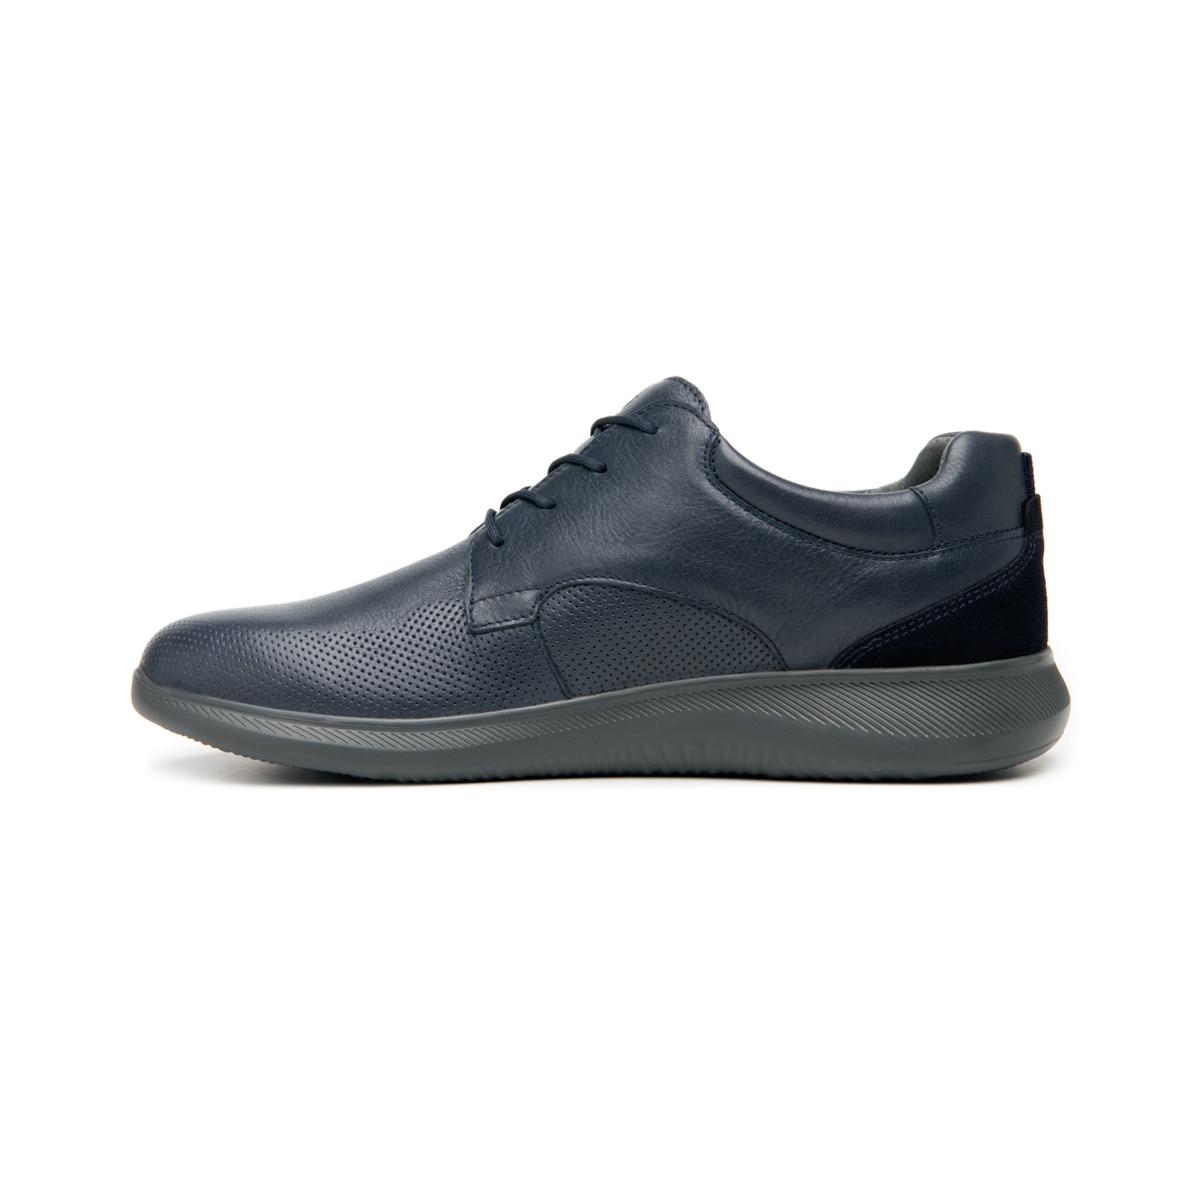 Zapato hombre ancho especial cómodos super flexibles Primocx en azul